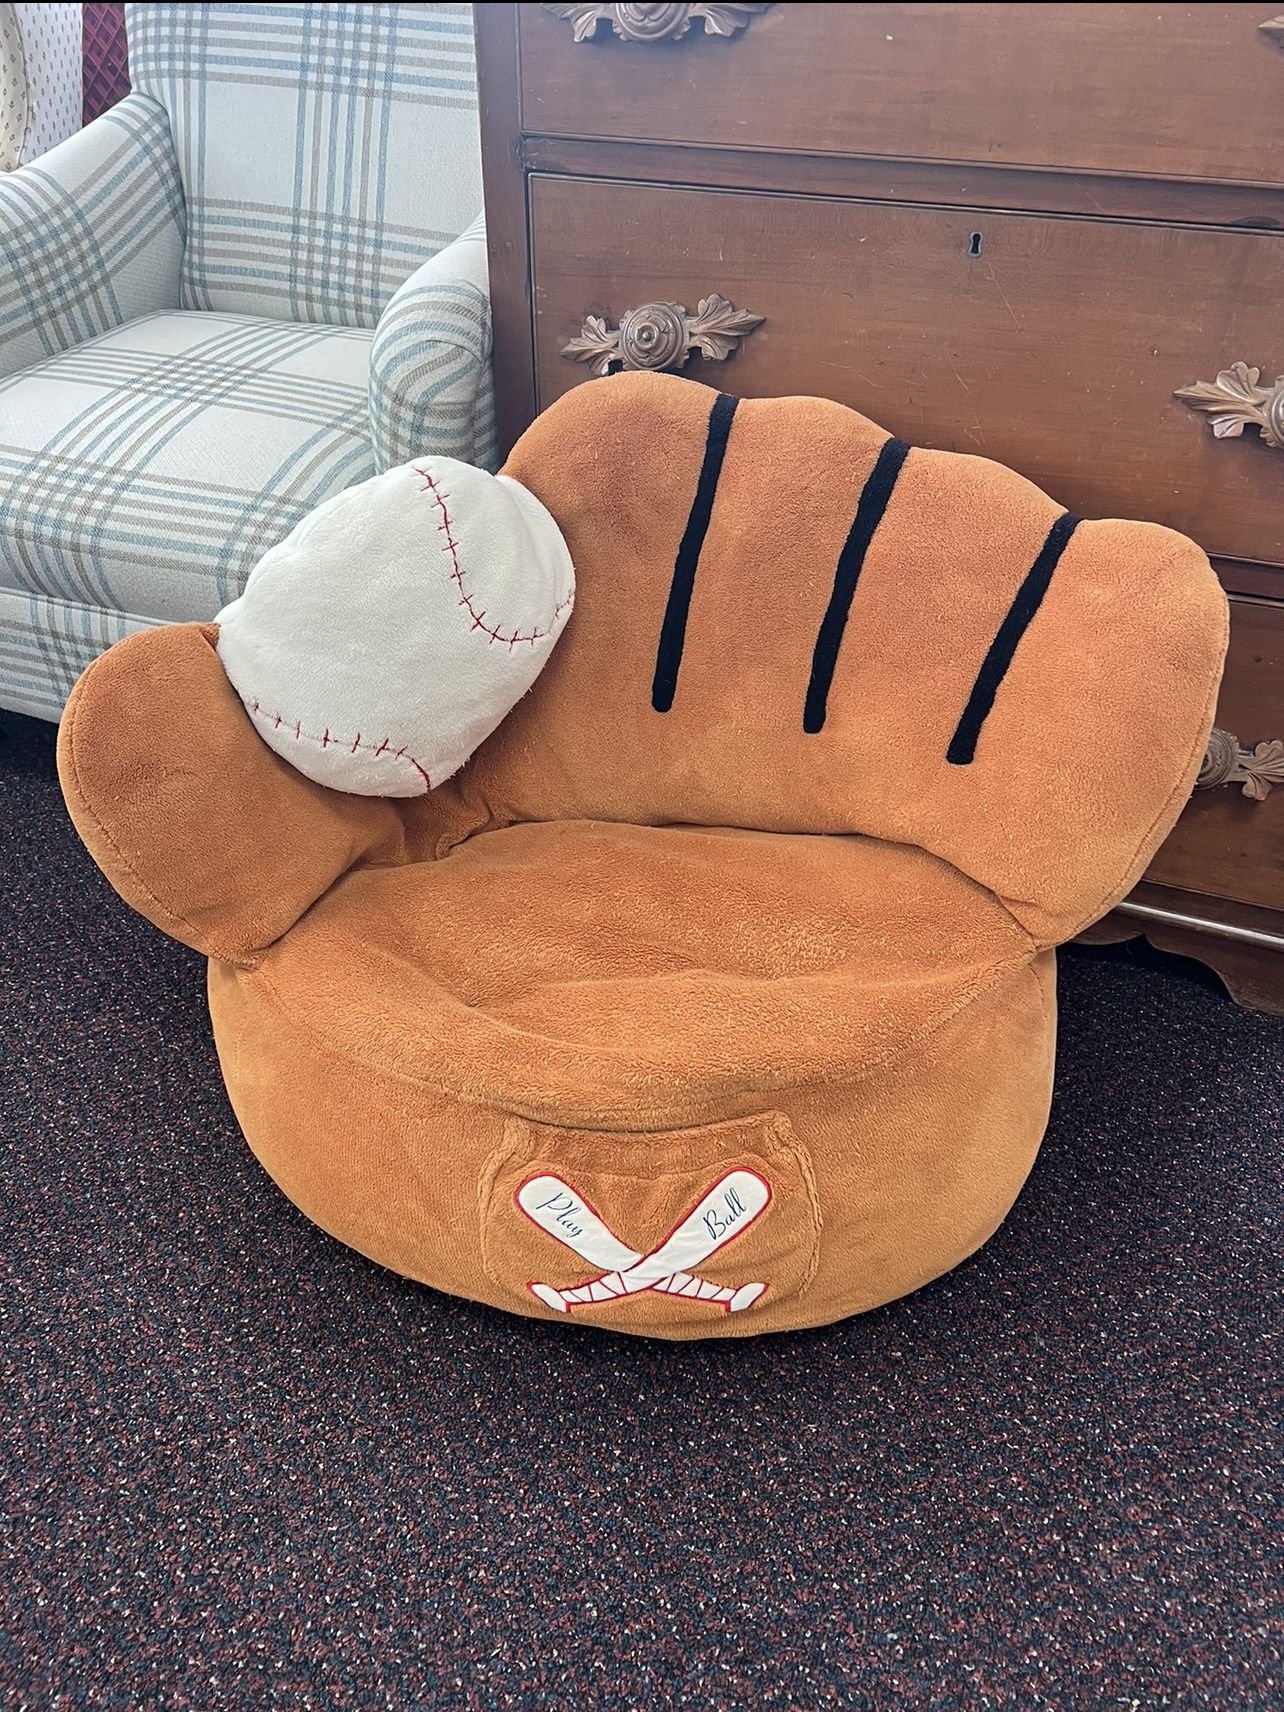 MOSHI Baseball Glove Cuddle Chair (Good condition) PICK UP IN CORNELIUS